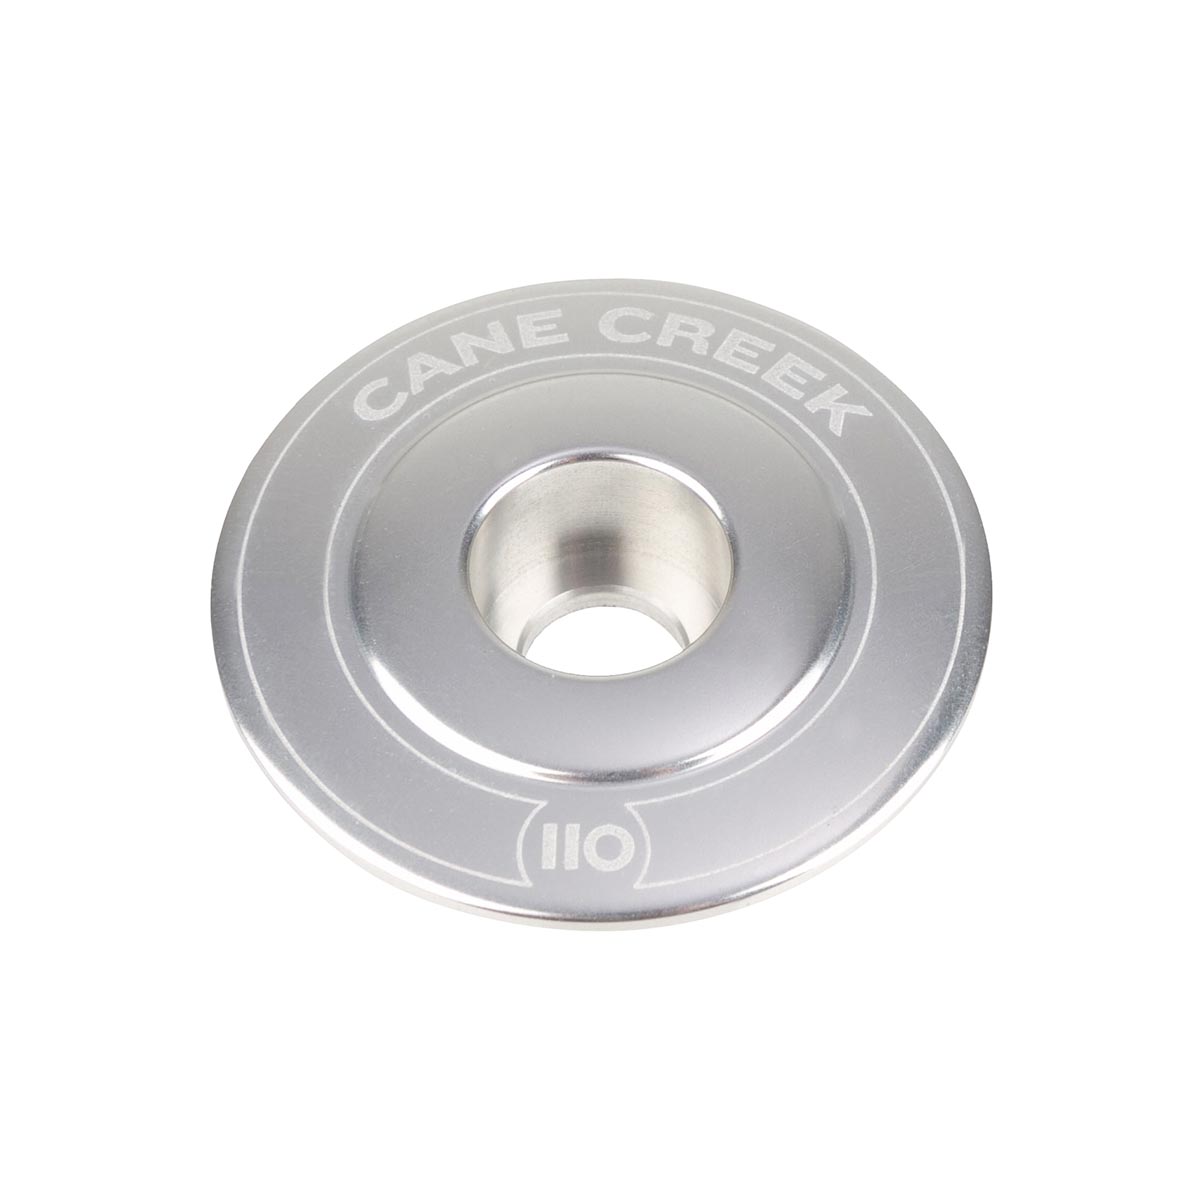 Cane Creek Ahead Kappe 110 Silber, Aluminium, 1 1/8 Zoll